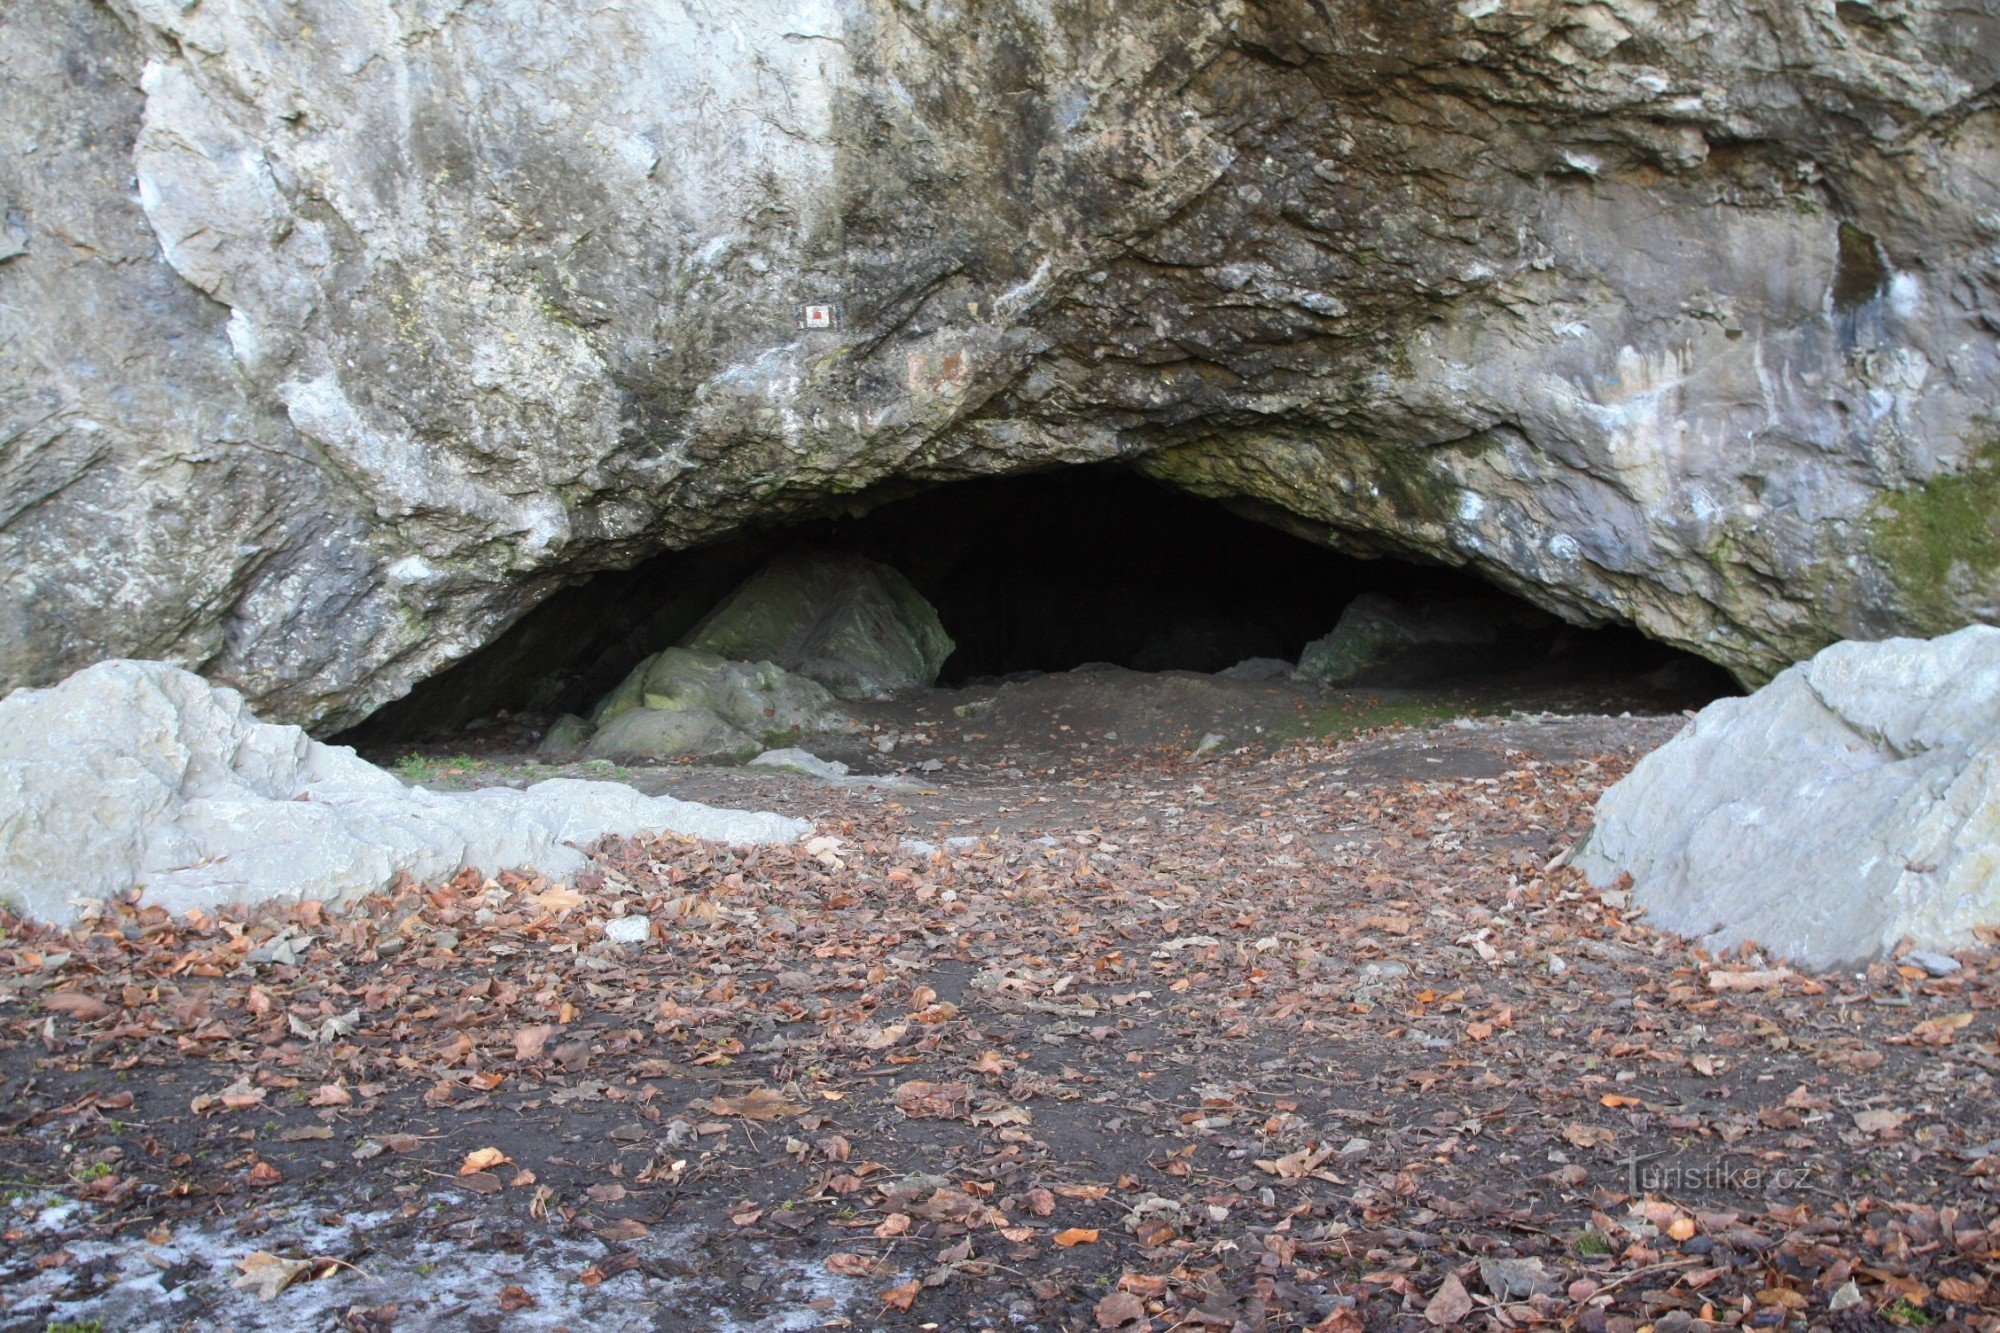 Lidomorna Cave, also called Hladomorna